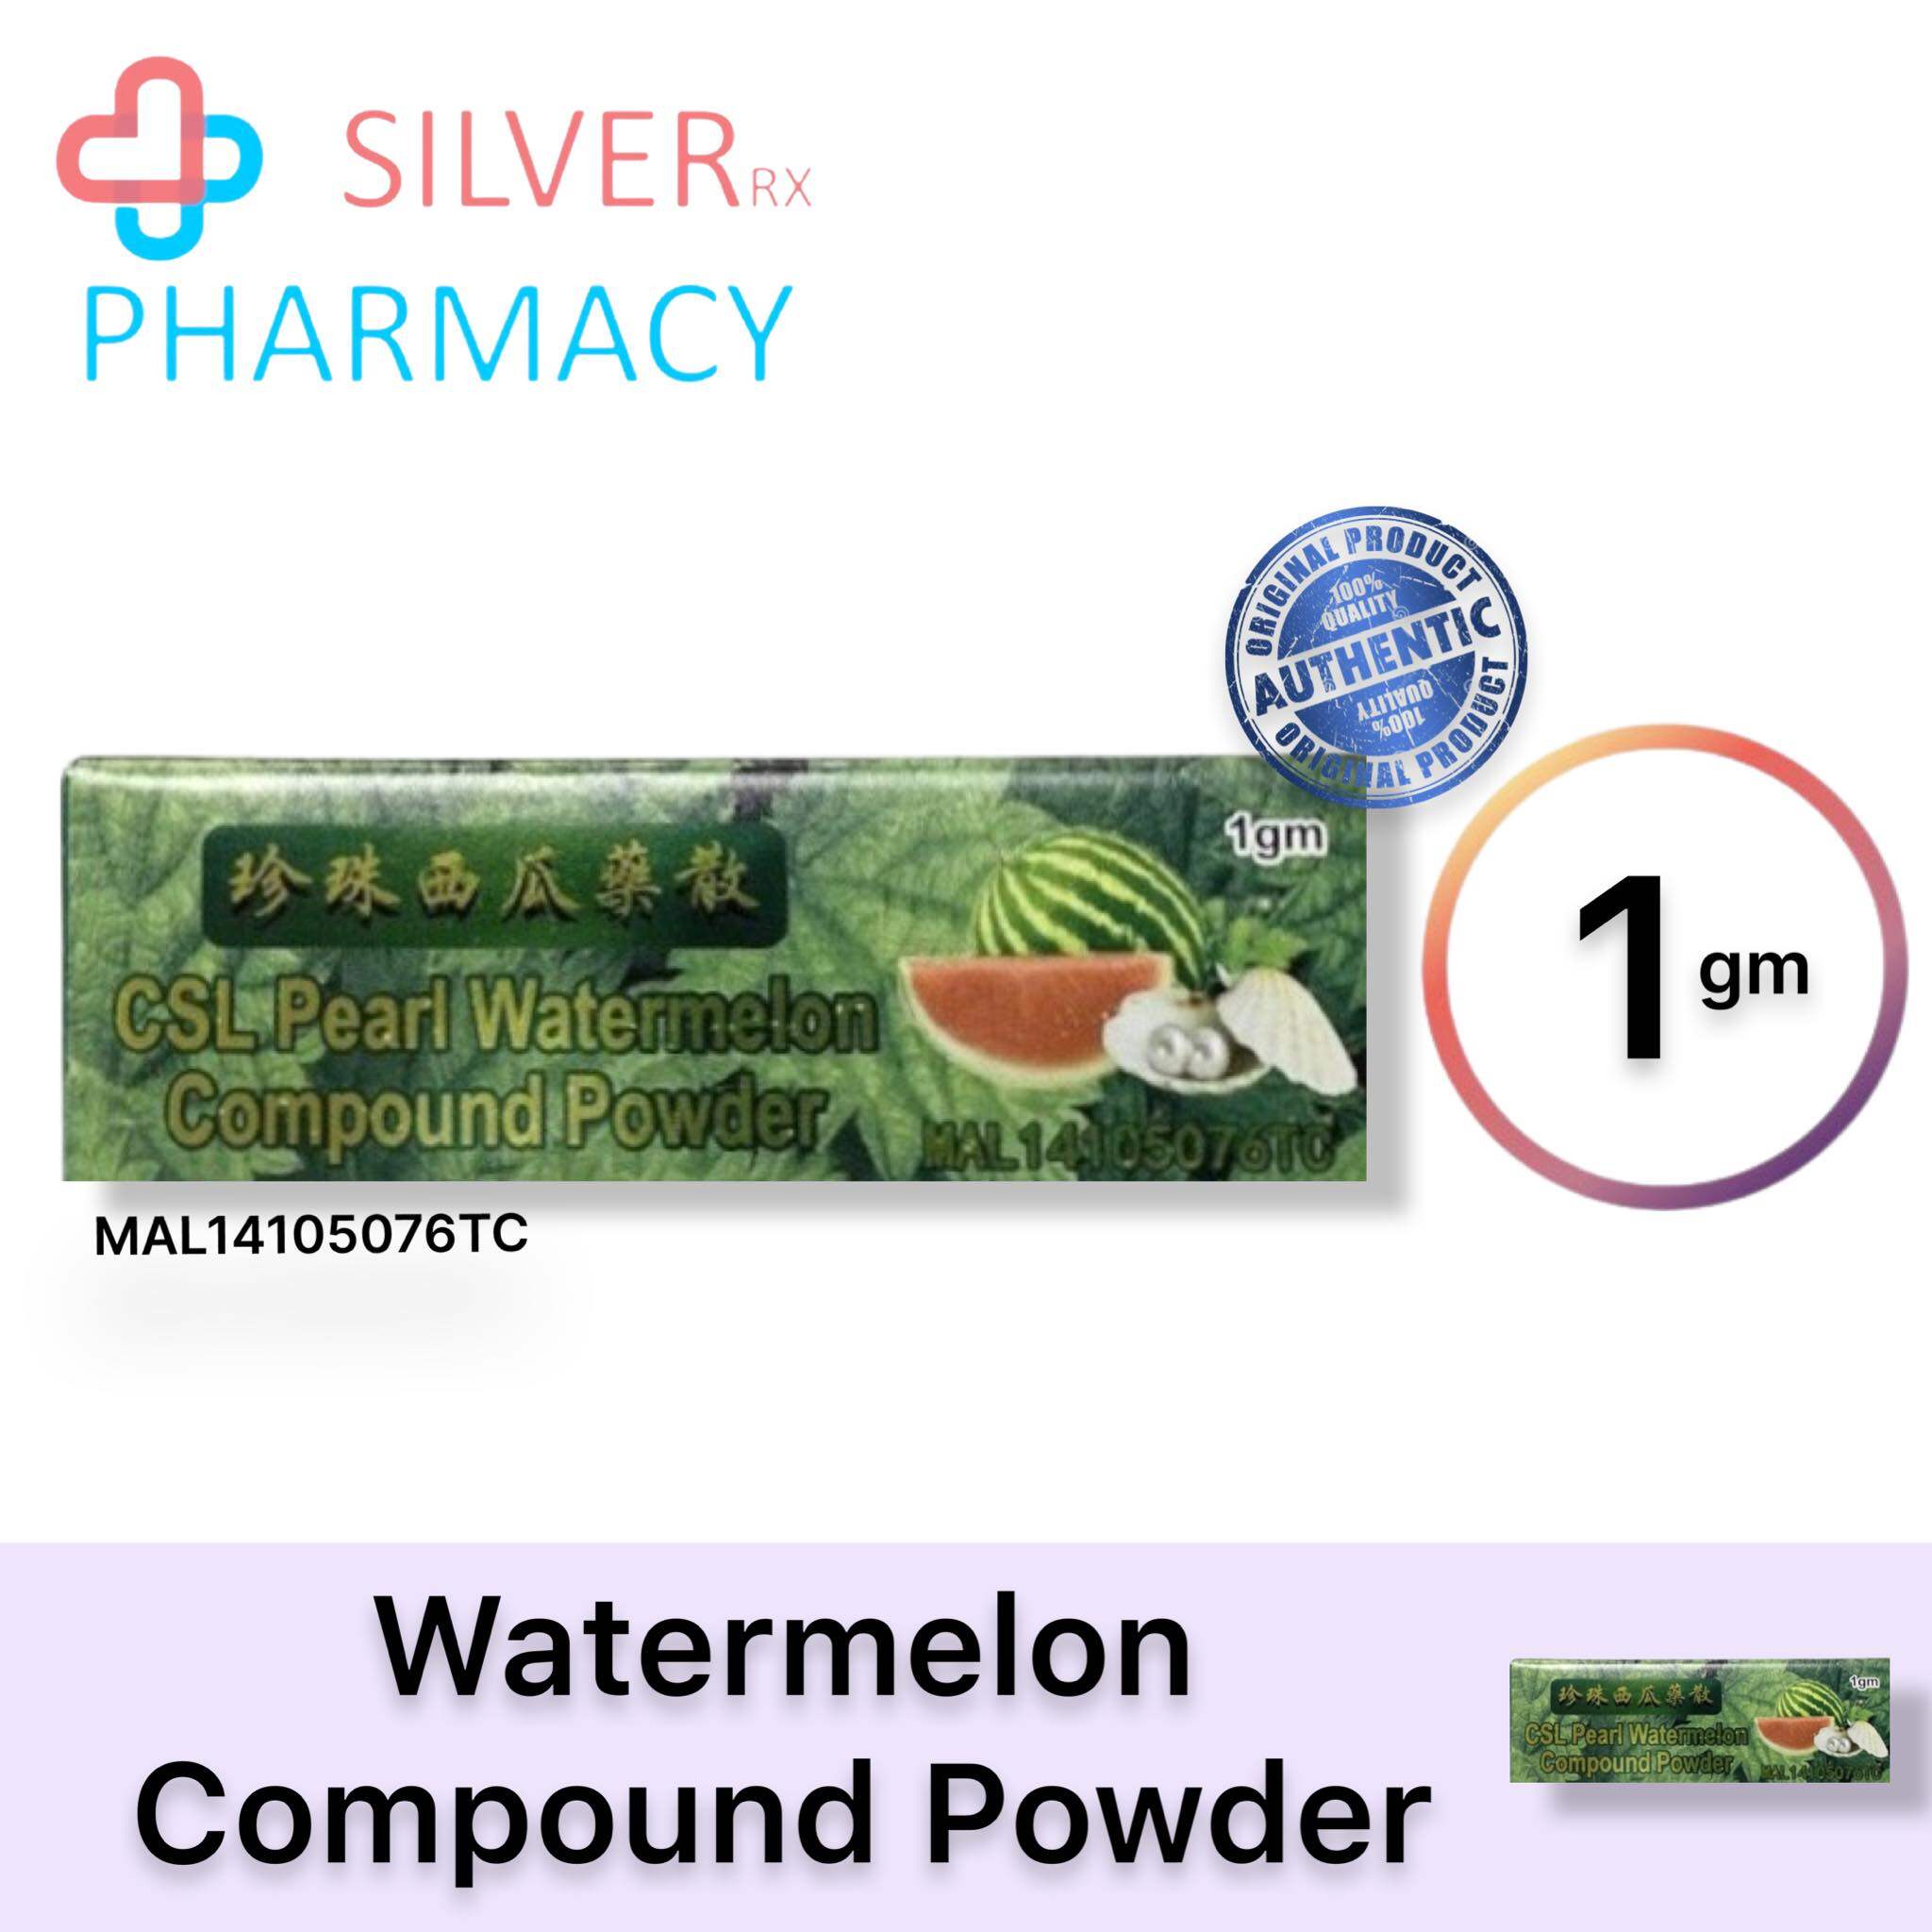 [Exp 10/2027] CSL Pearl Watermelon Compound Powder 1gm